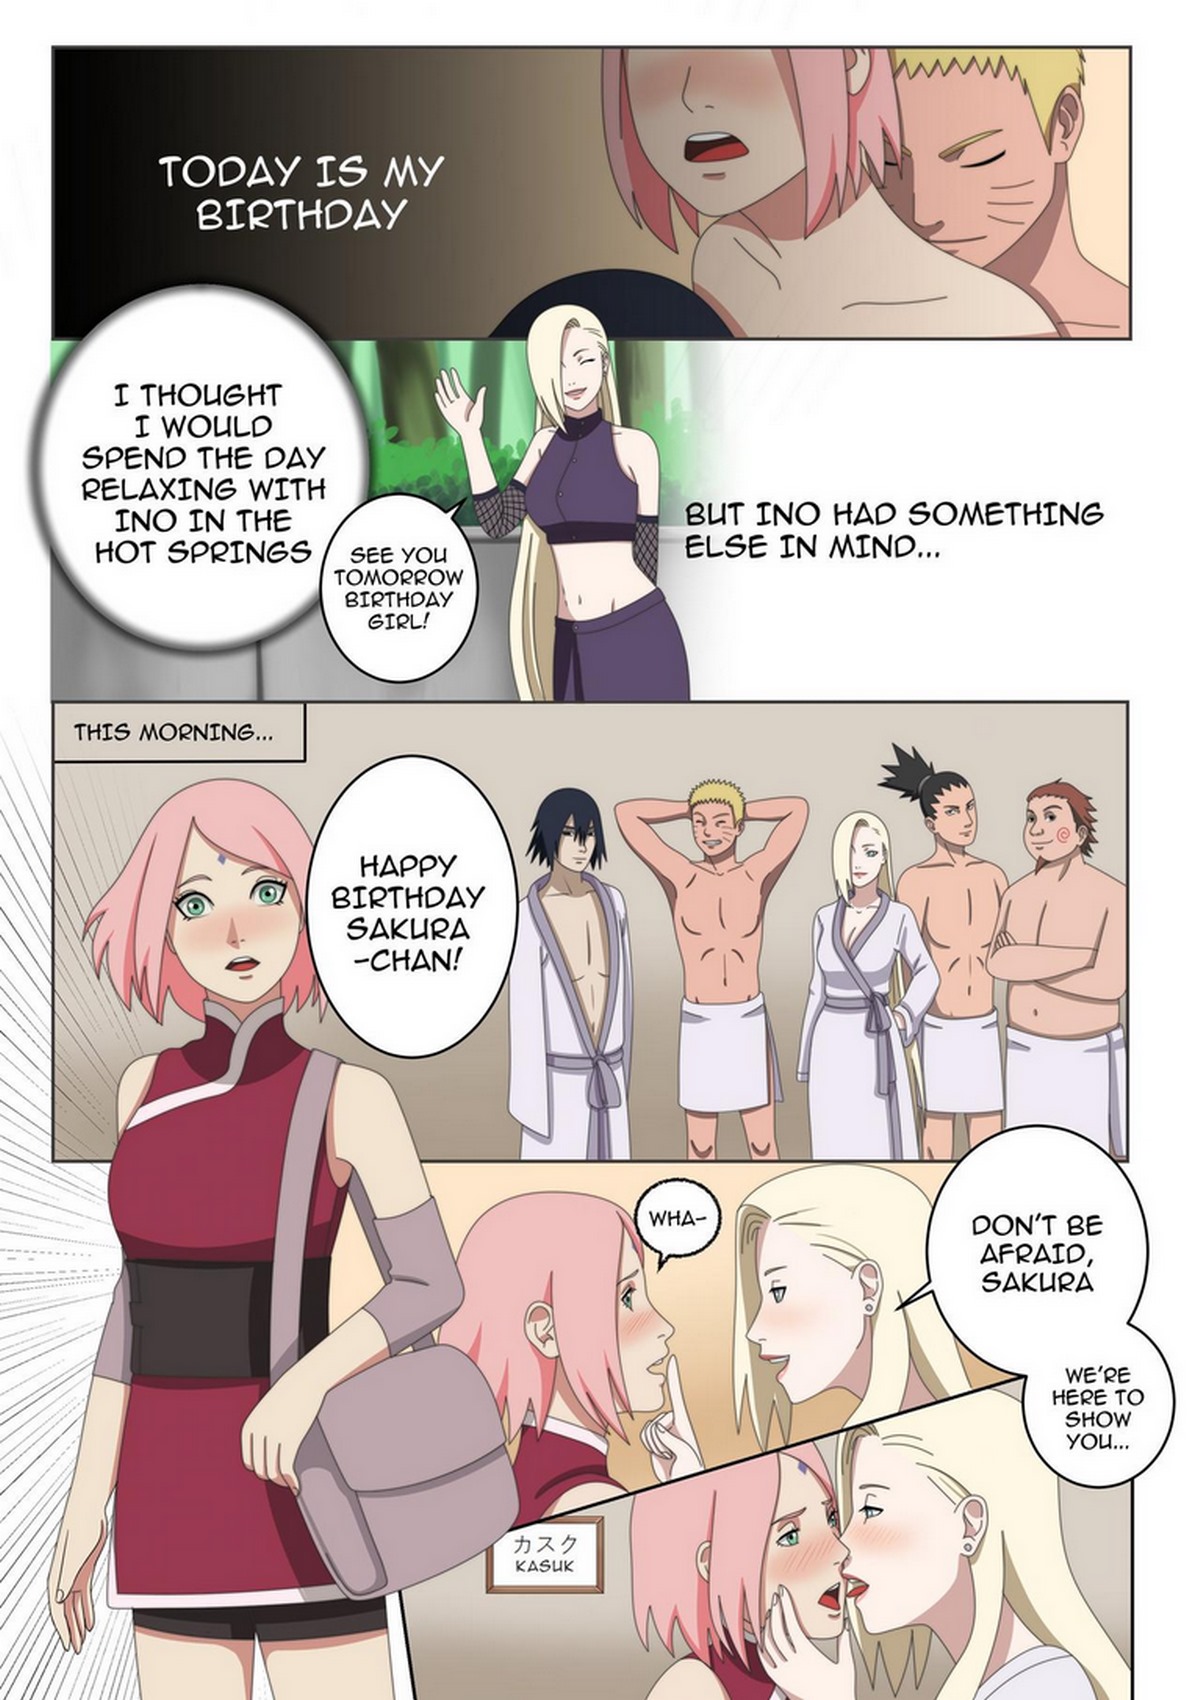 Sakura porn comic.